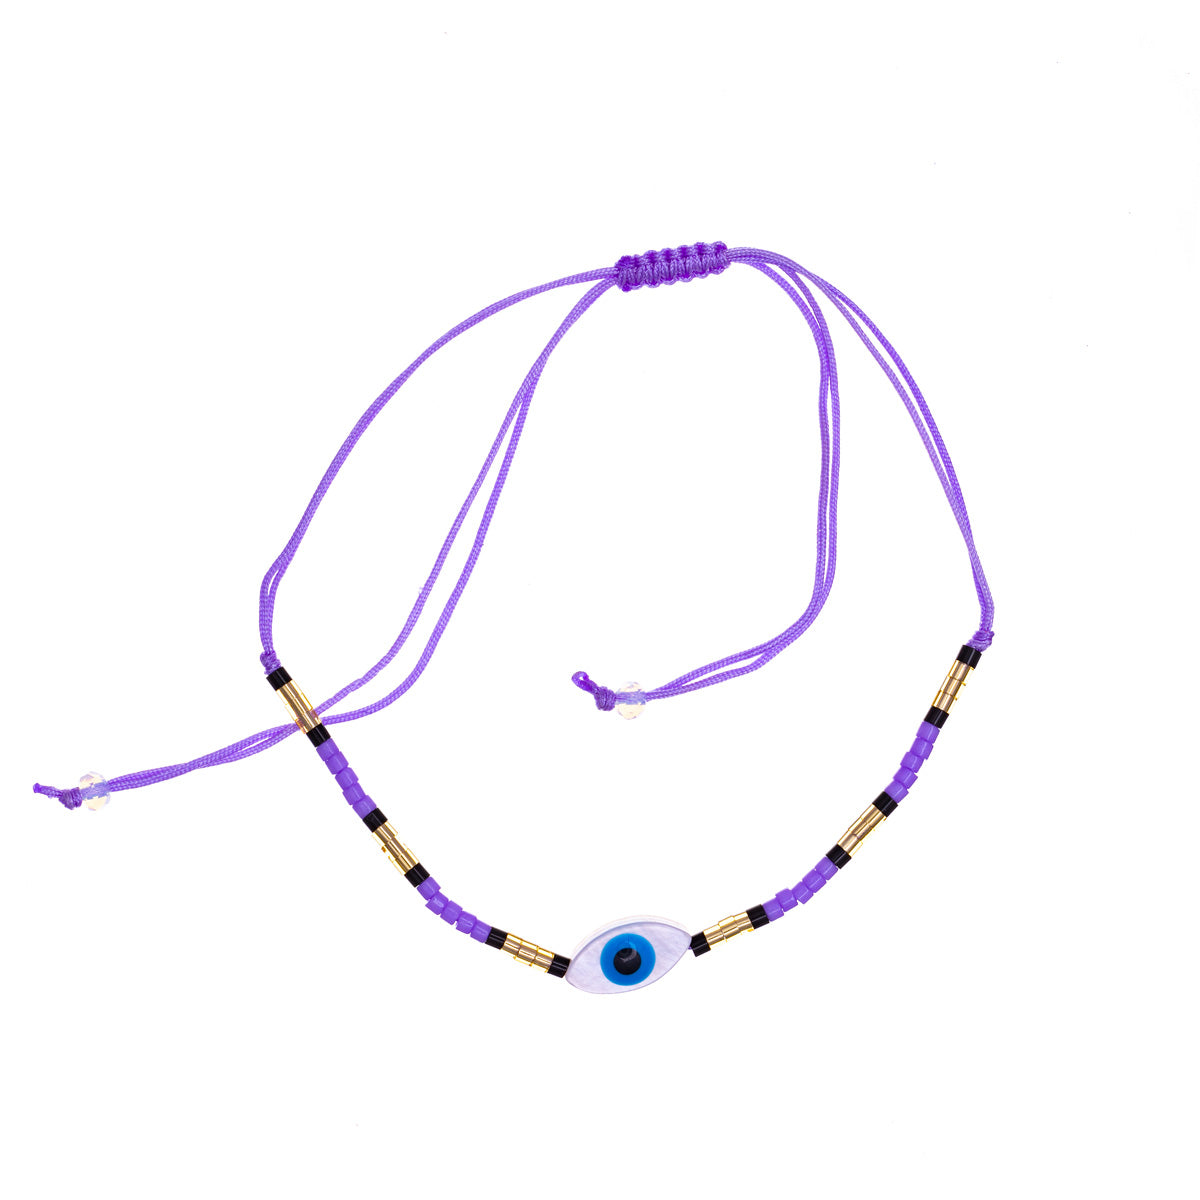 Adjustable evil eye bracelet with beads